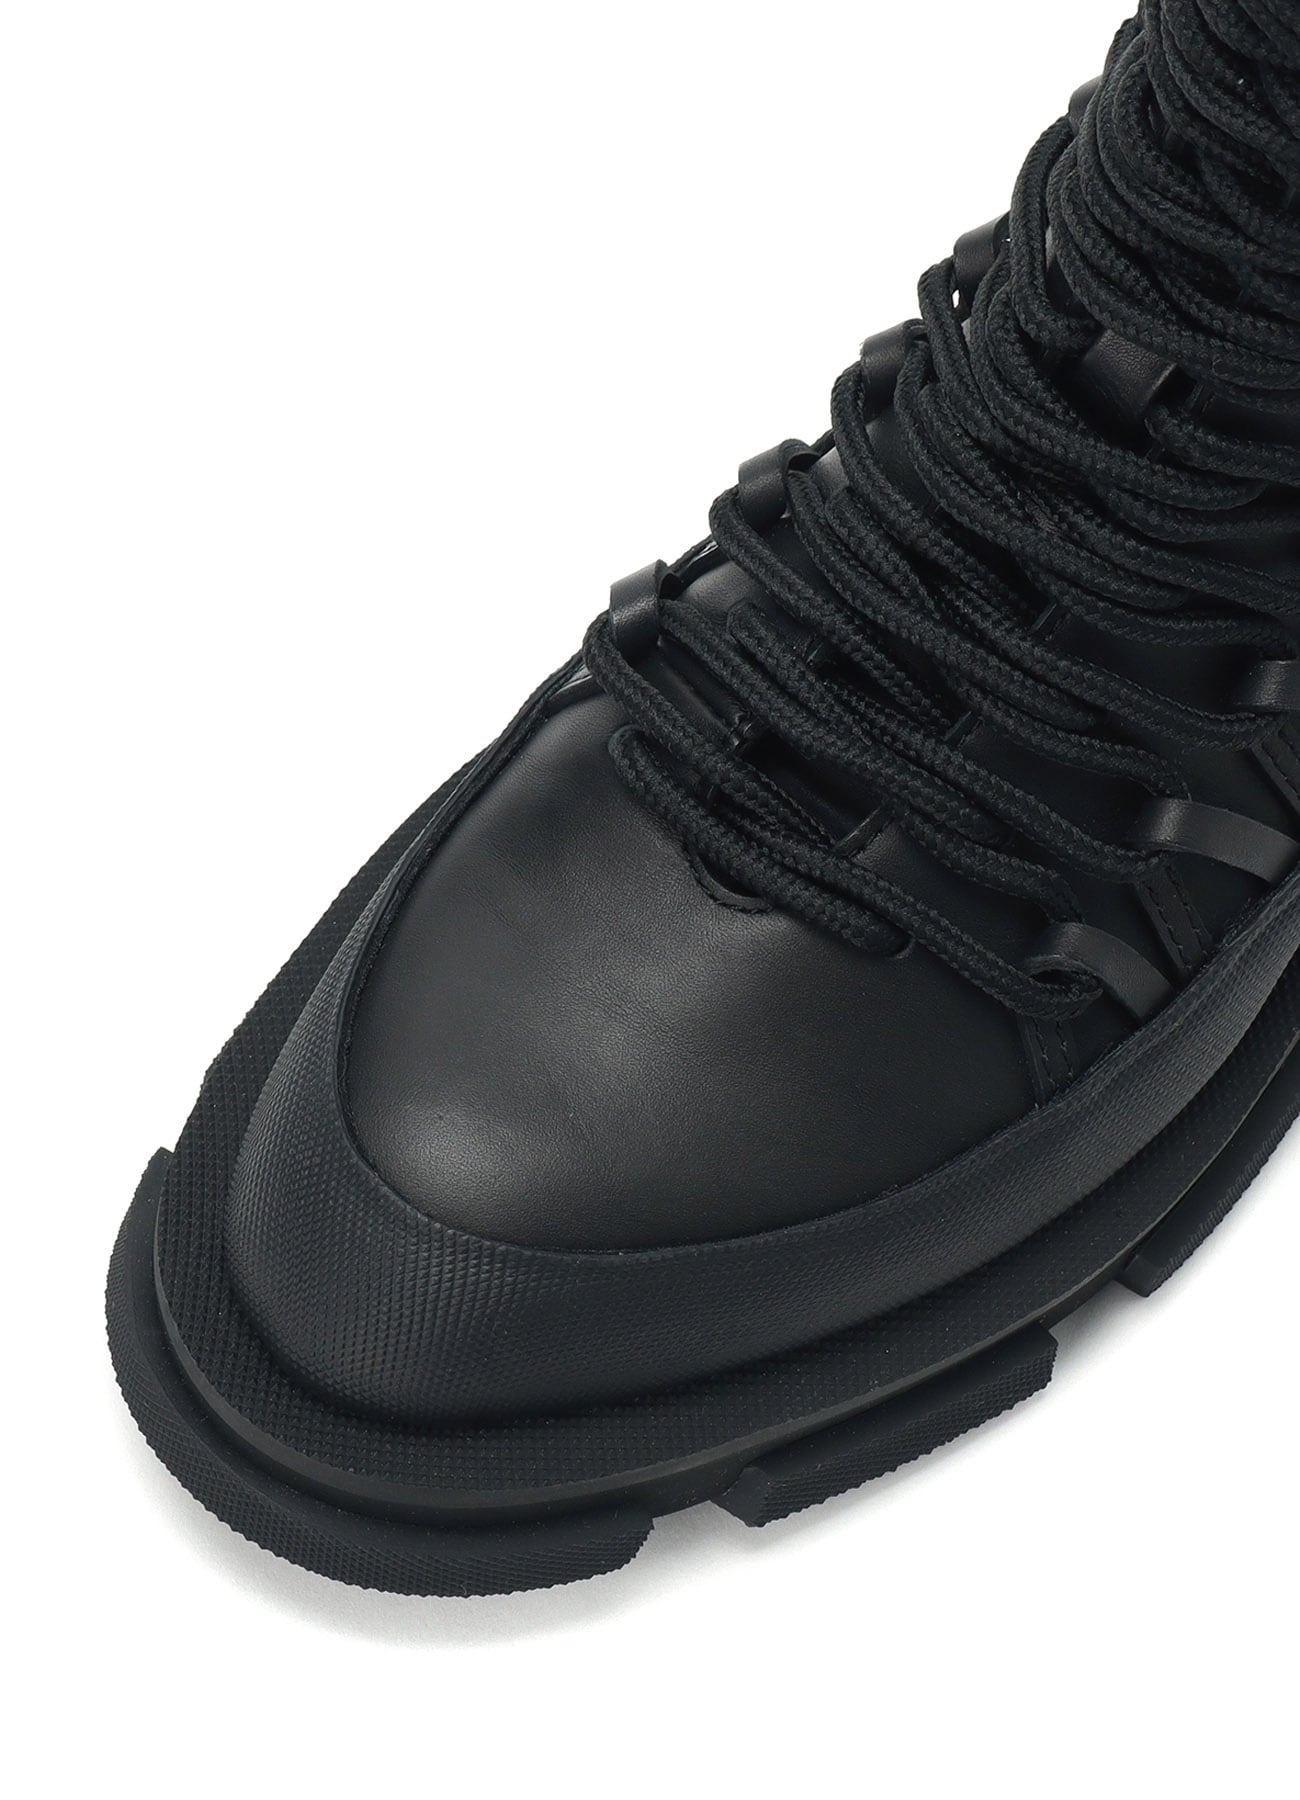 Y's x both]Lace-up boots(US 6.5 Black): Y's|THE SHOP YOHJI YAMAMOTO